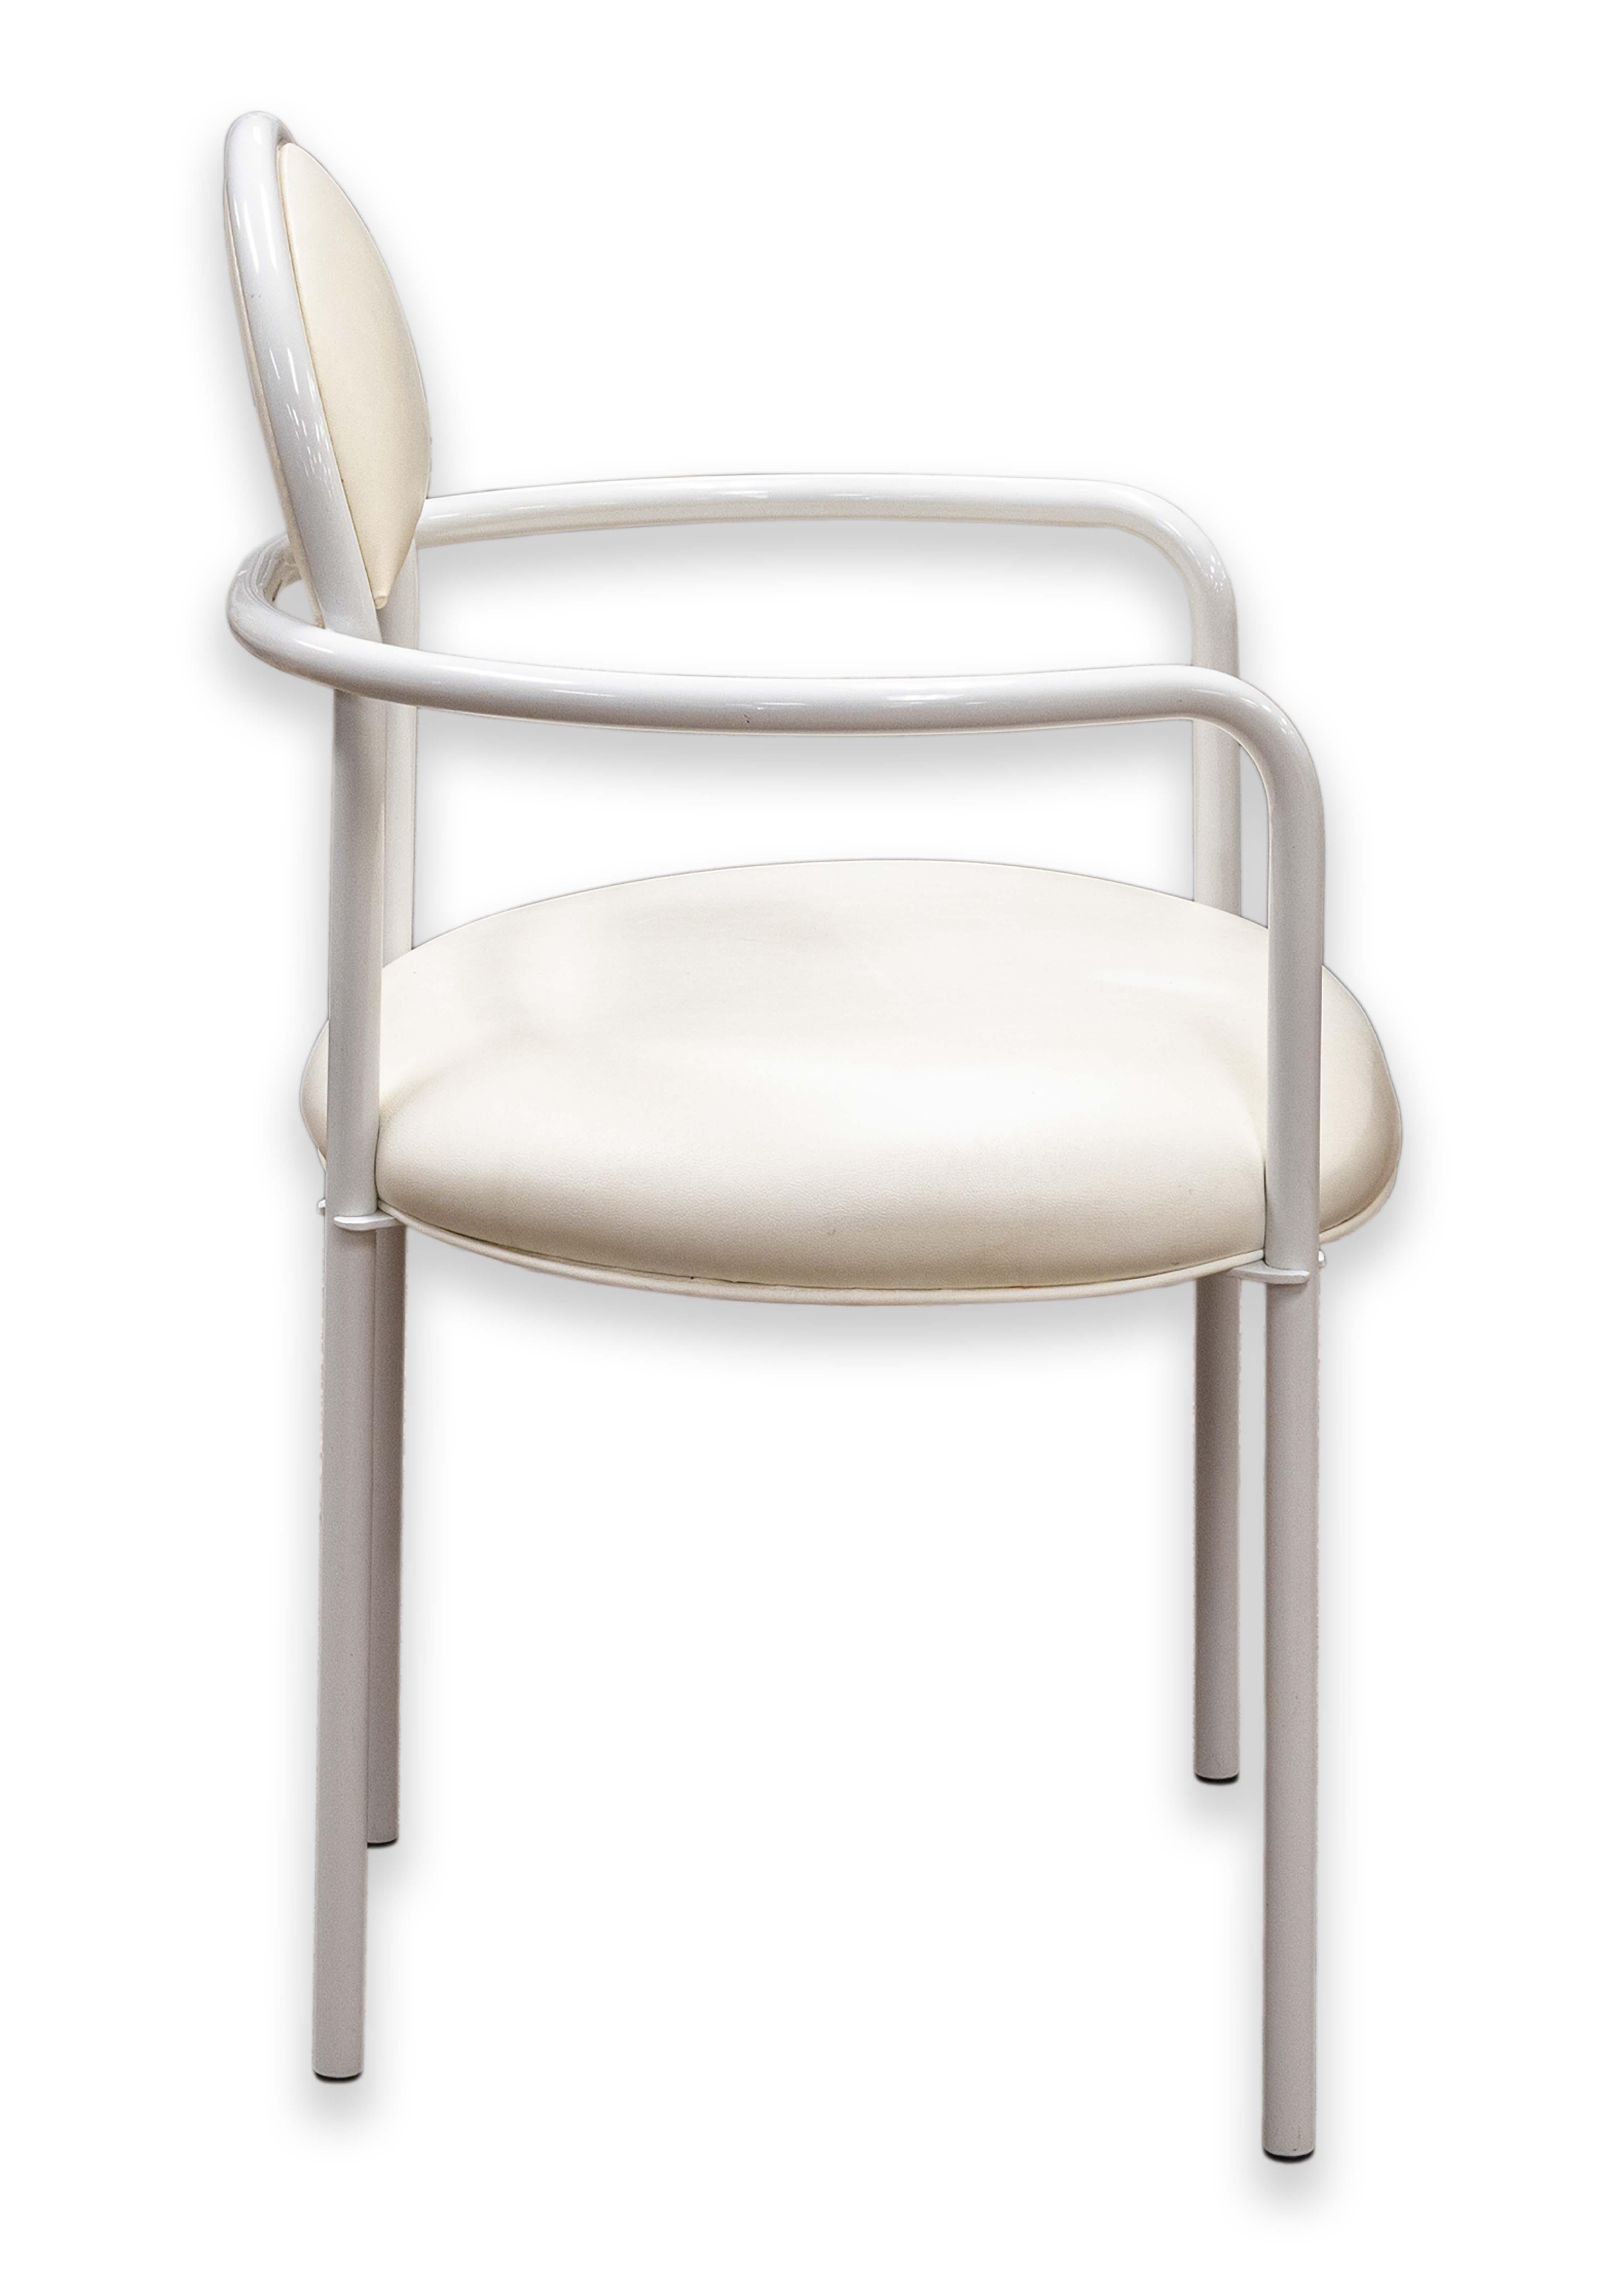 Set of 4 Memphis Style Bieffeplast Italian White and Cream Metal Armchairs For Sale 7